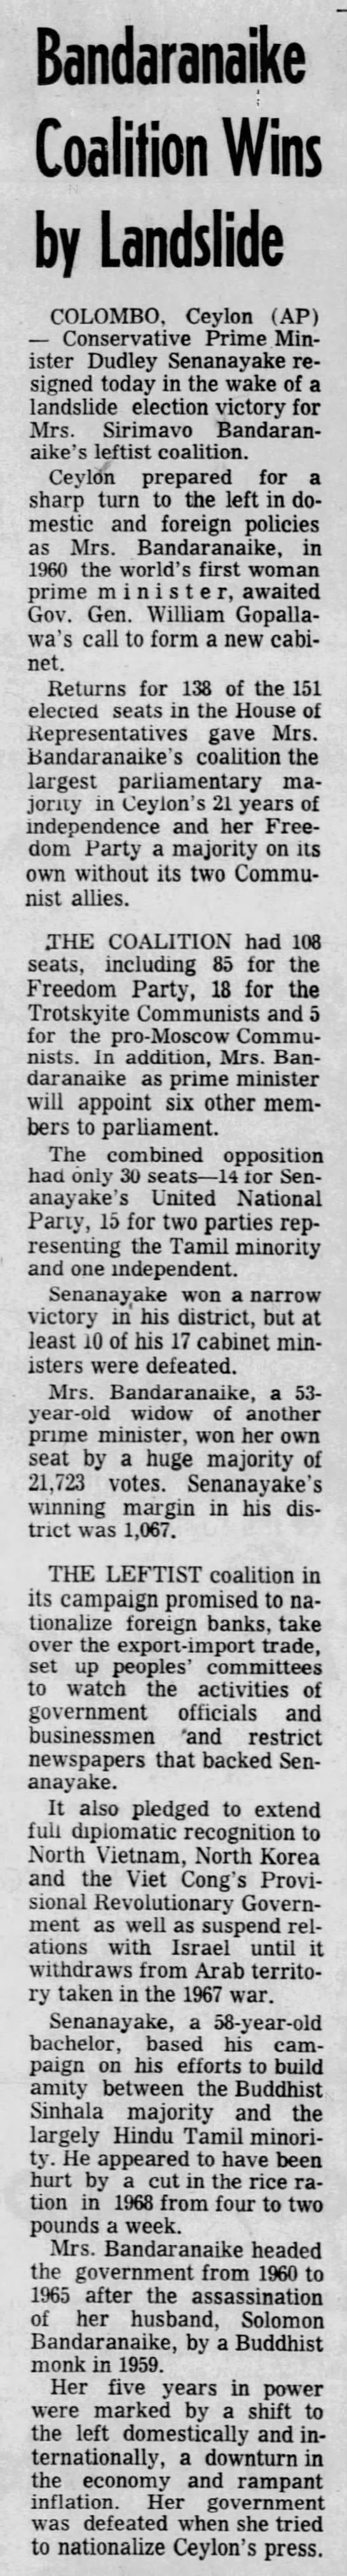 Bandaranaike Coalition Wins by Landslide. (AP) The Honolulu Star-Bulletin 28 May 1970, p 2 - 